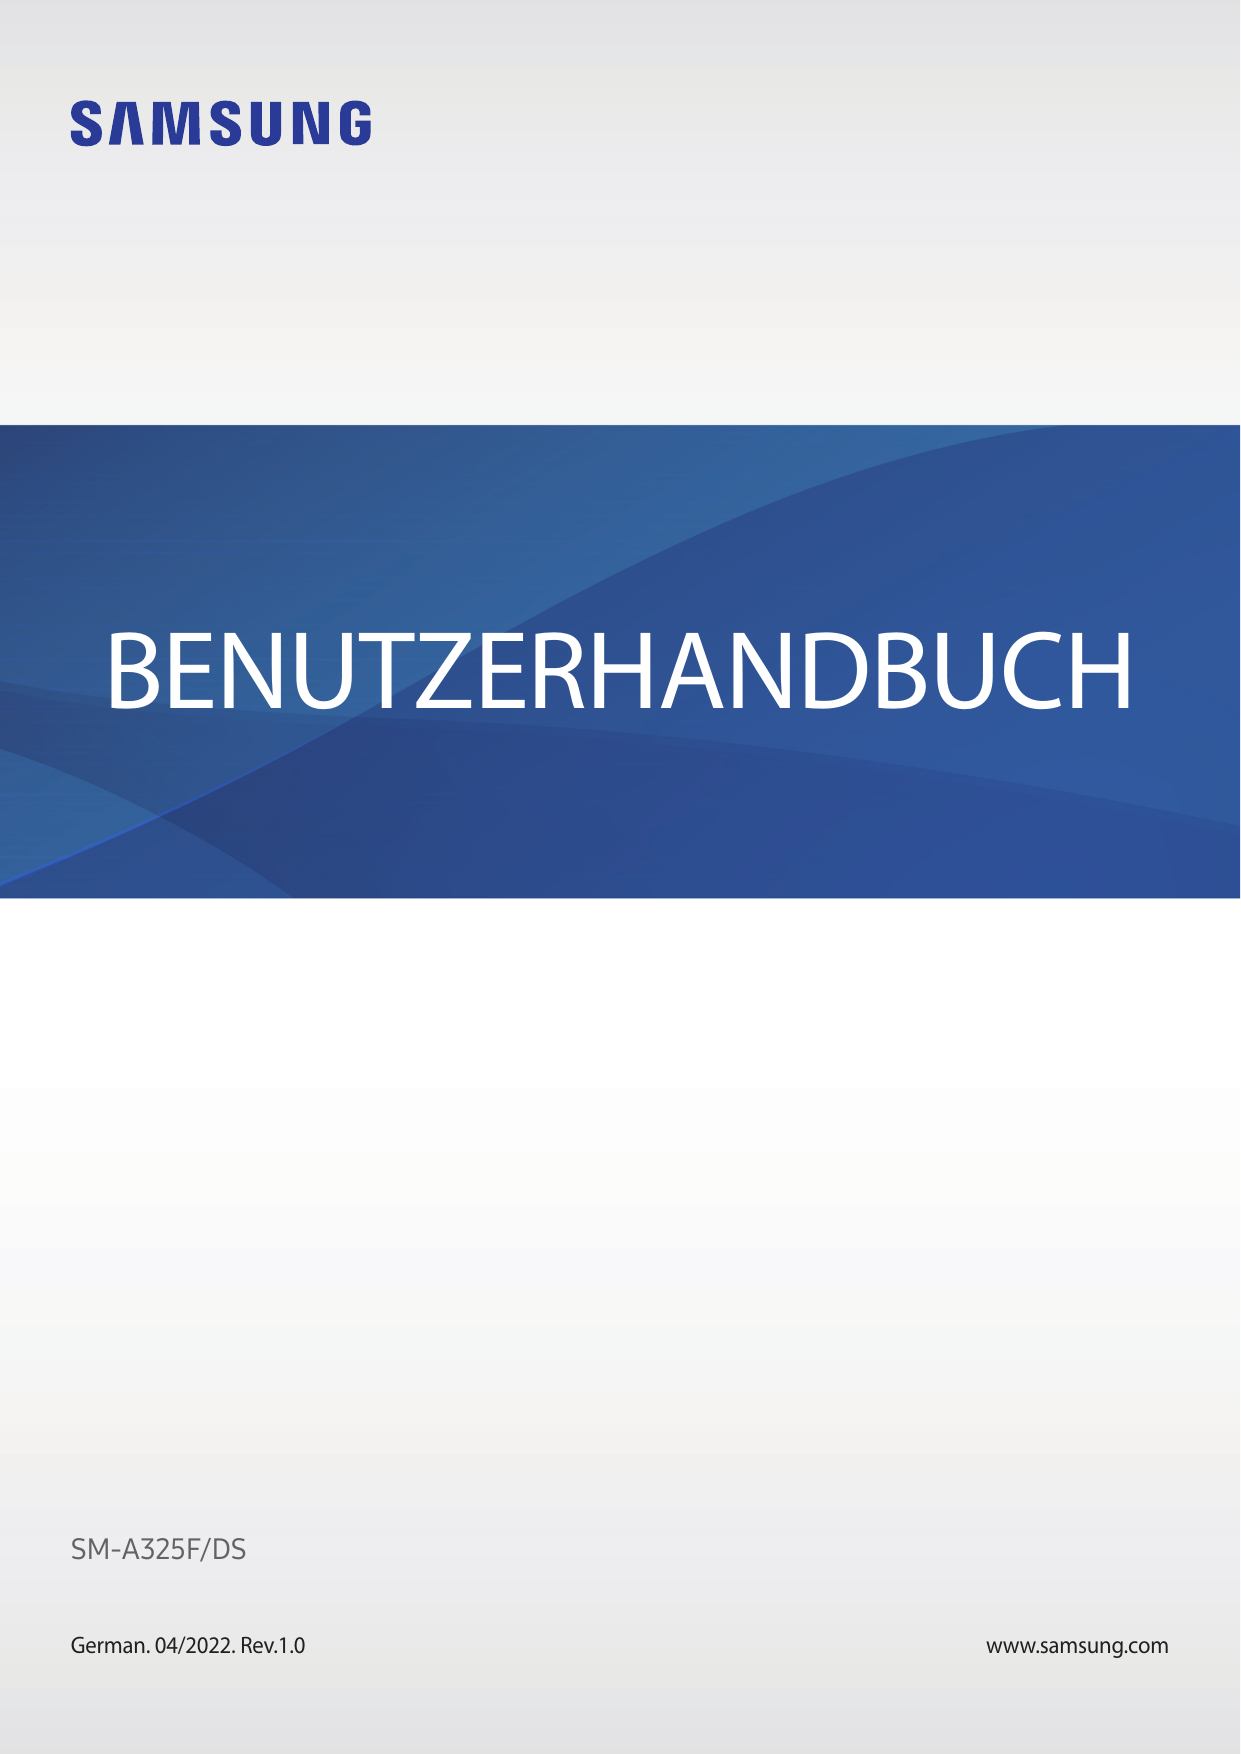 BENUTZERHANDBUCHSM-A325F/DSGerman. 04/2022. Rev.1.0www.samsung.com